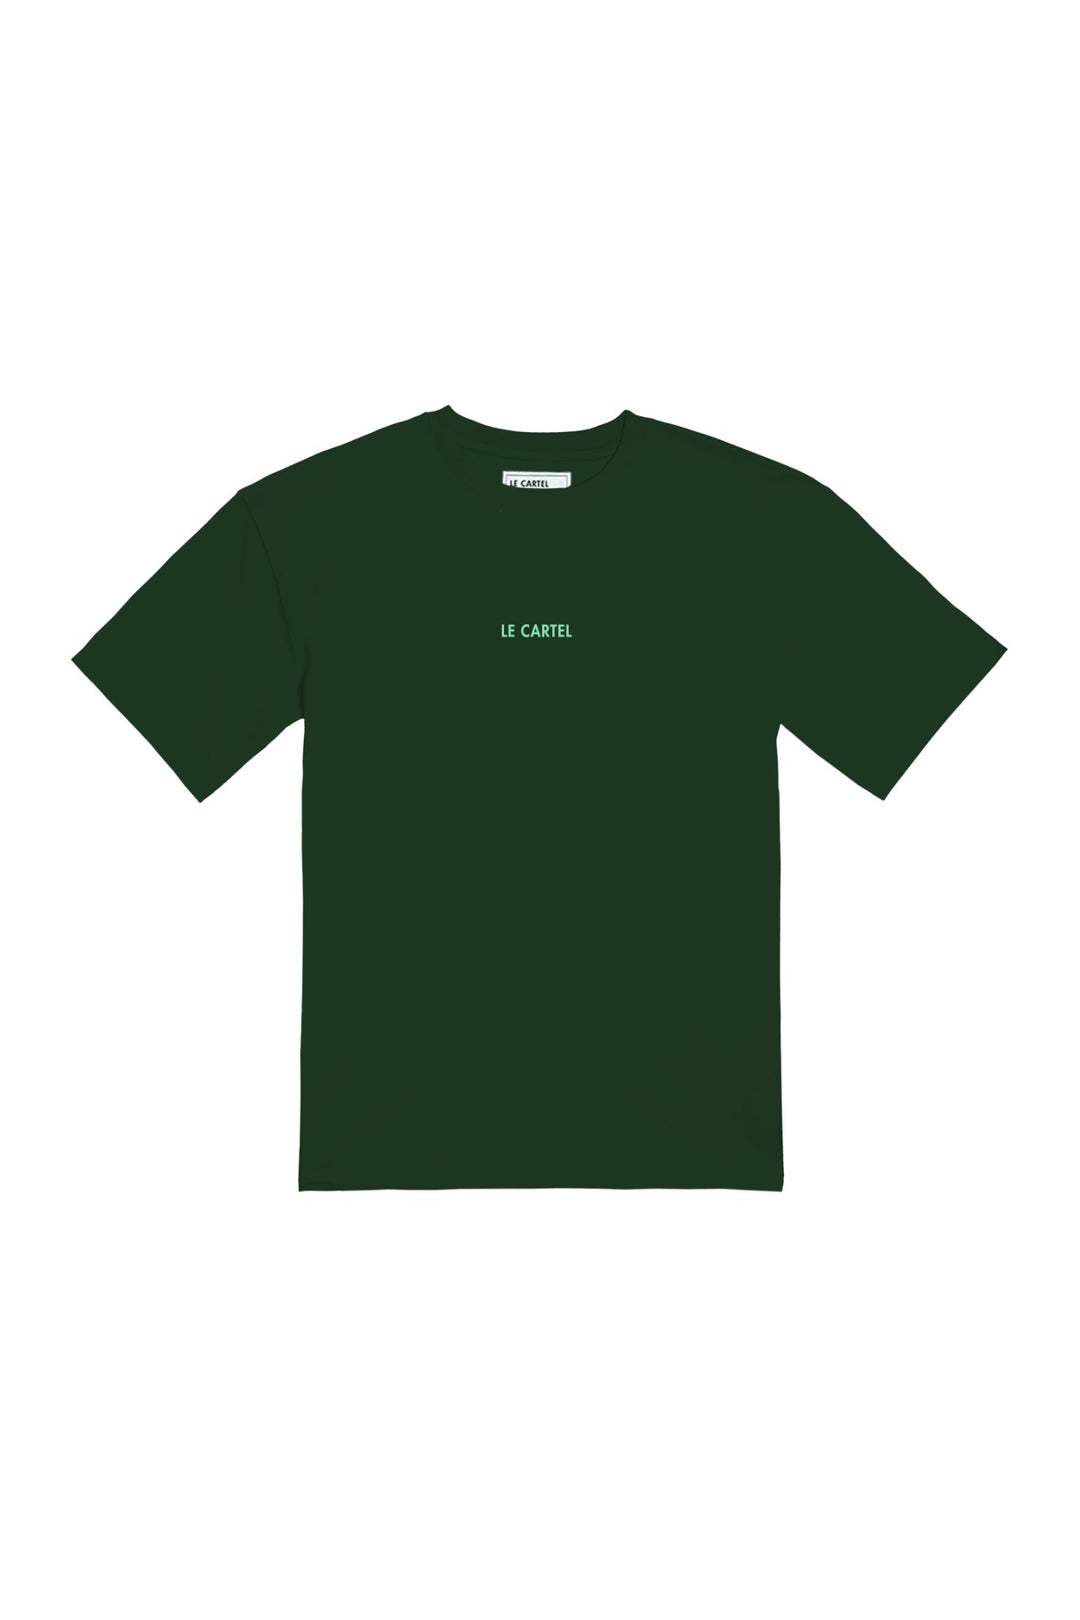 TANDEM・T - shirt unisexe・Vert - Le Cartel